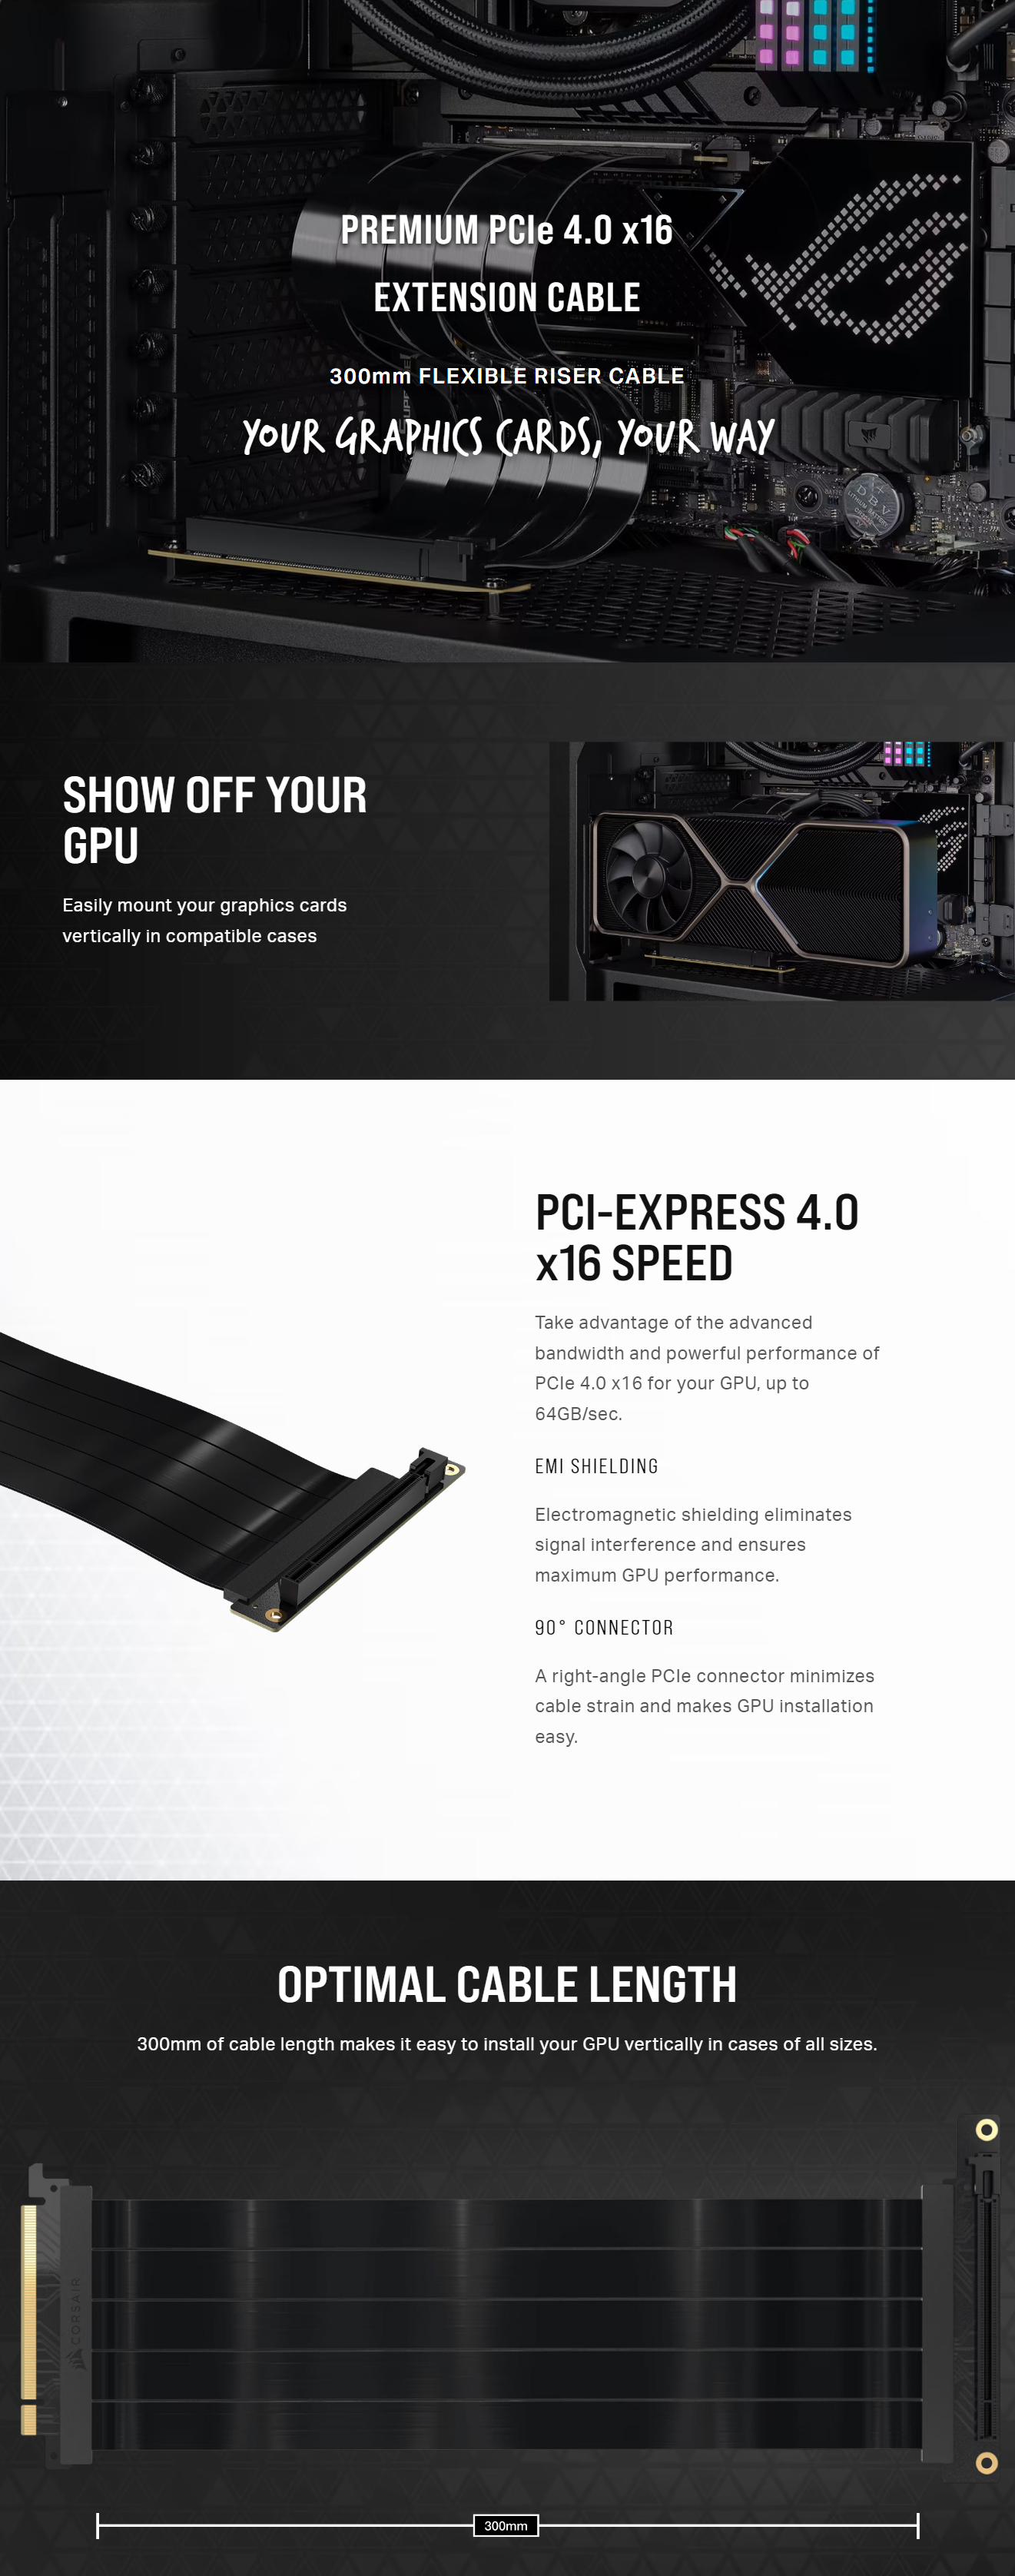 GPU-Accessories-Corsair-Premium-PCIe-4-0-x16-Extension-Cable-300mm-1